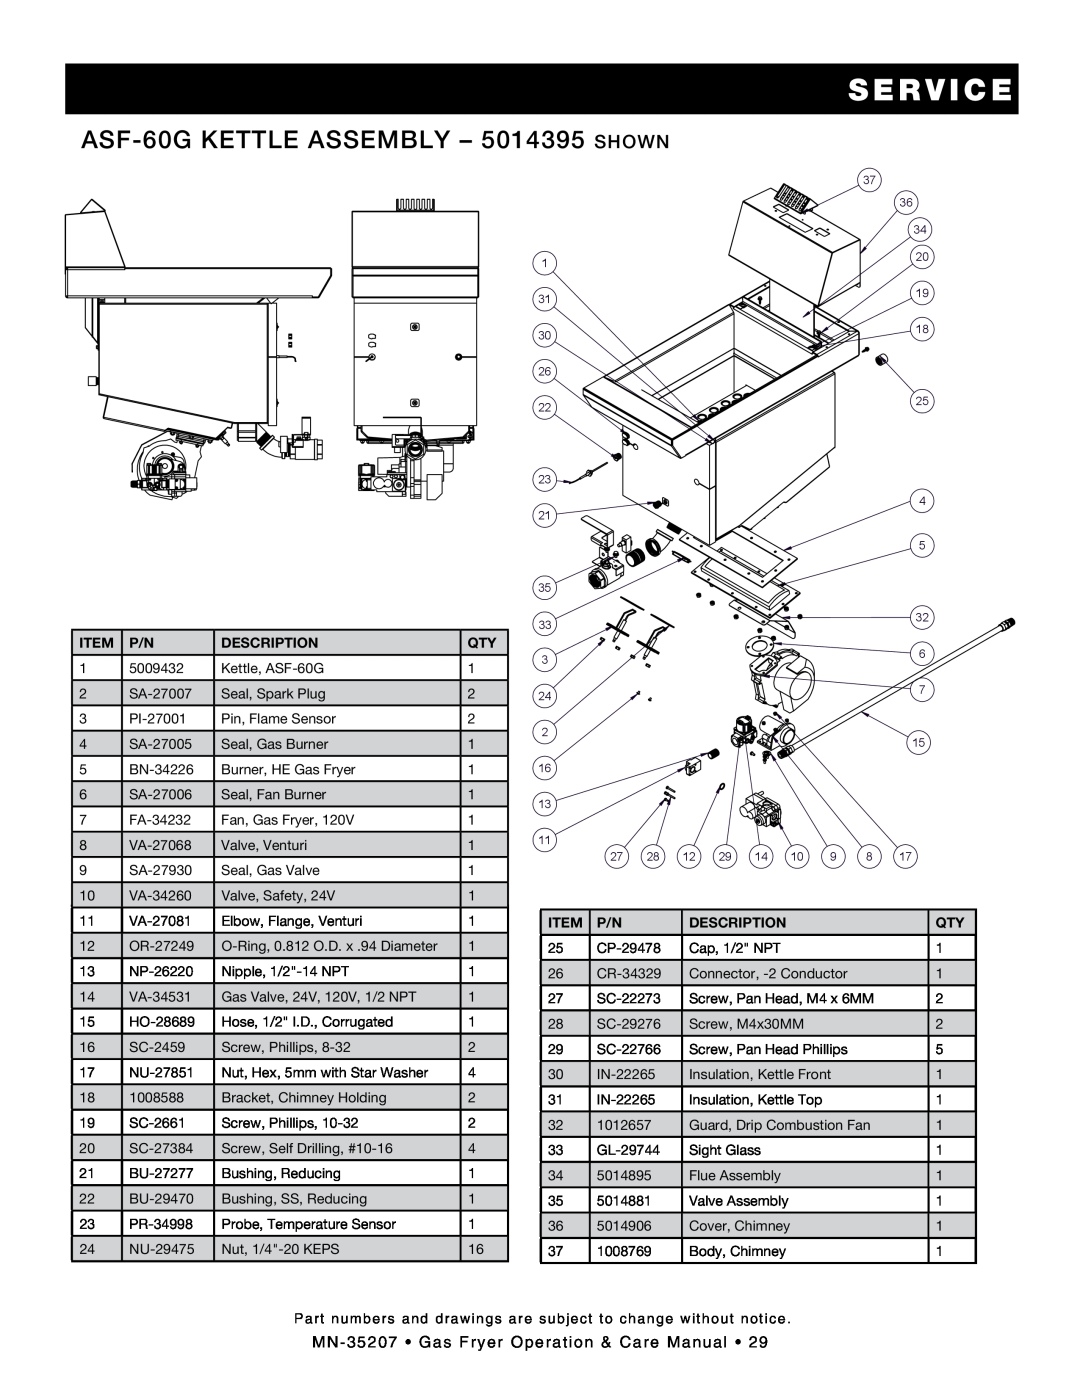 Alto-Shaam Gas Fryer manual ASF-60G Kettle Assembly - 5014395 shown, s e r v i c e, Description 